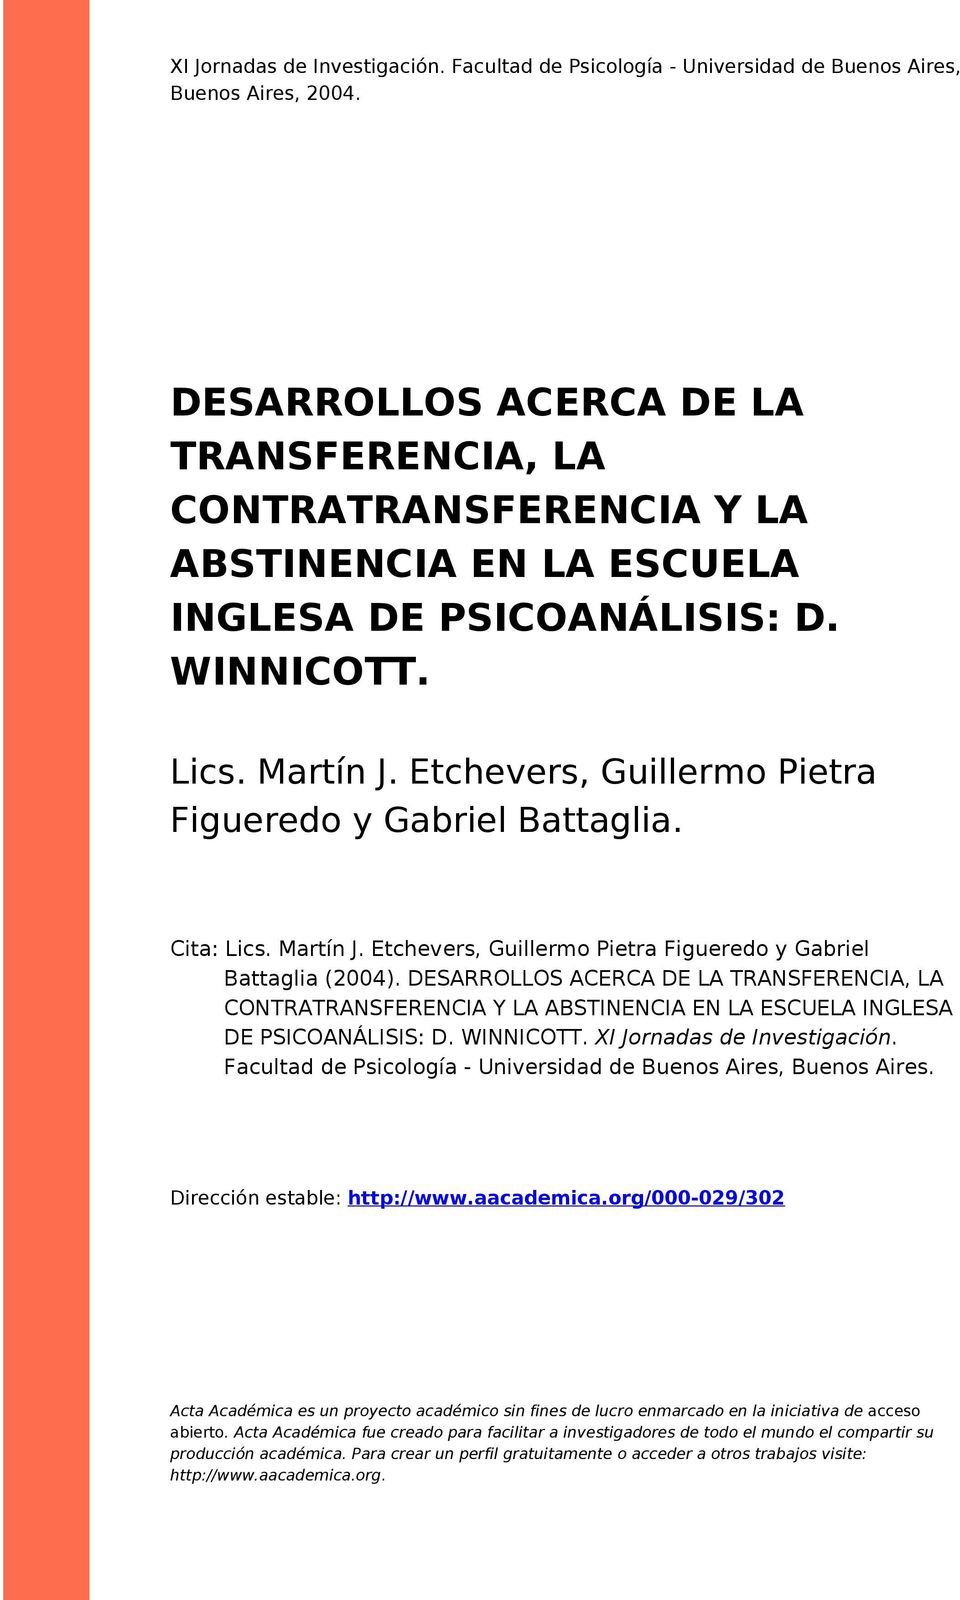 Etchevers, Guillermo Pietra Figueredo y Gabriel Battaglia. Cita: Lics. Martín J. Etchevers, Guillermo Pietra Figueredo y Gabriel Battaglia (2004).